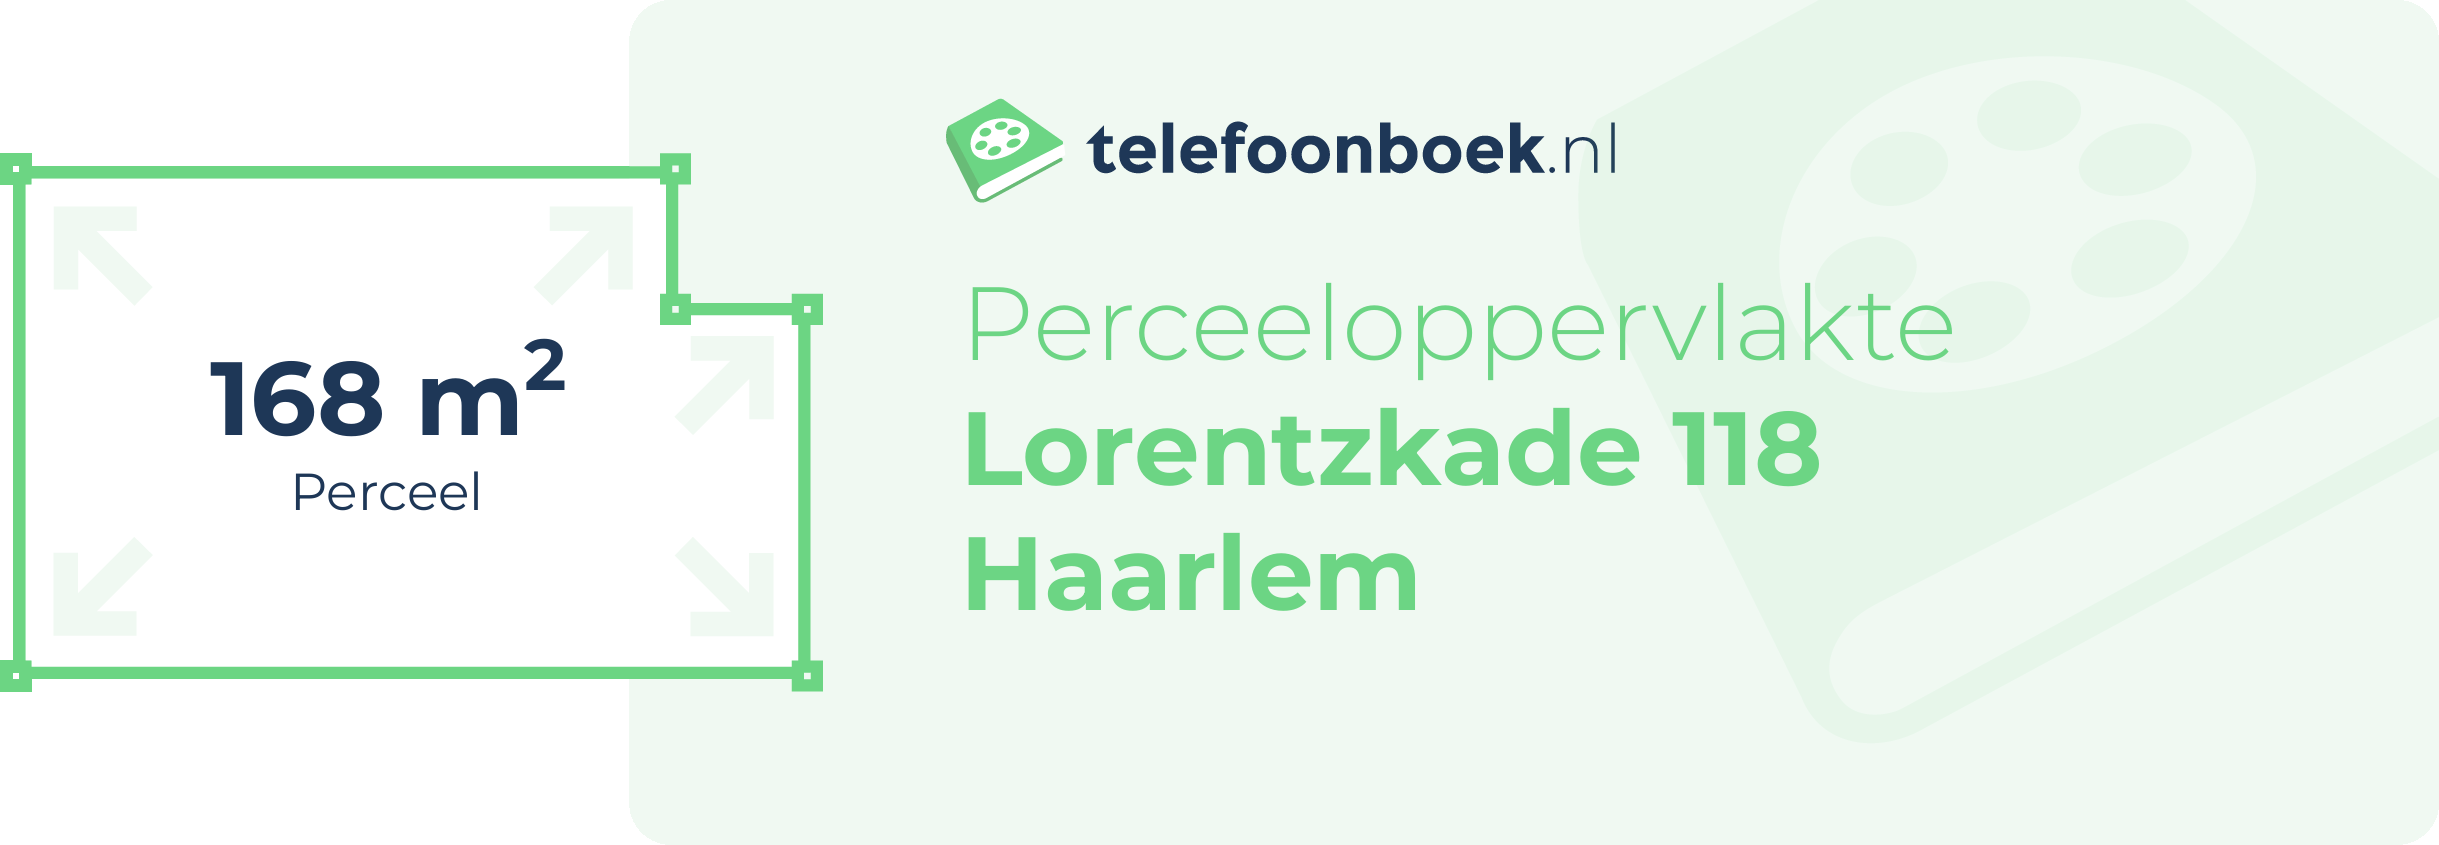 Perceeloppervlakte Lorentzkade 118 Haarlem